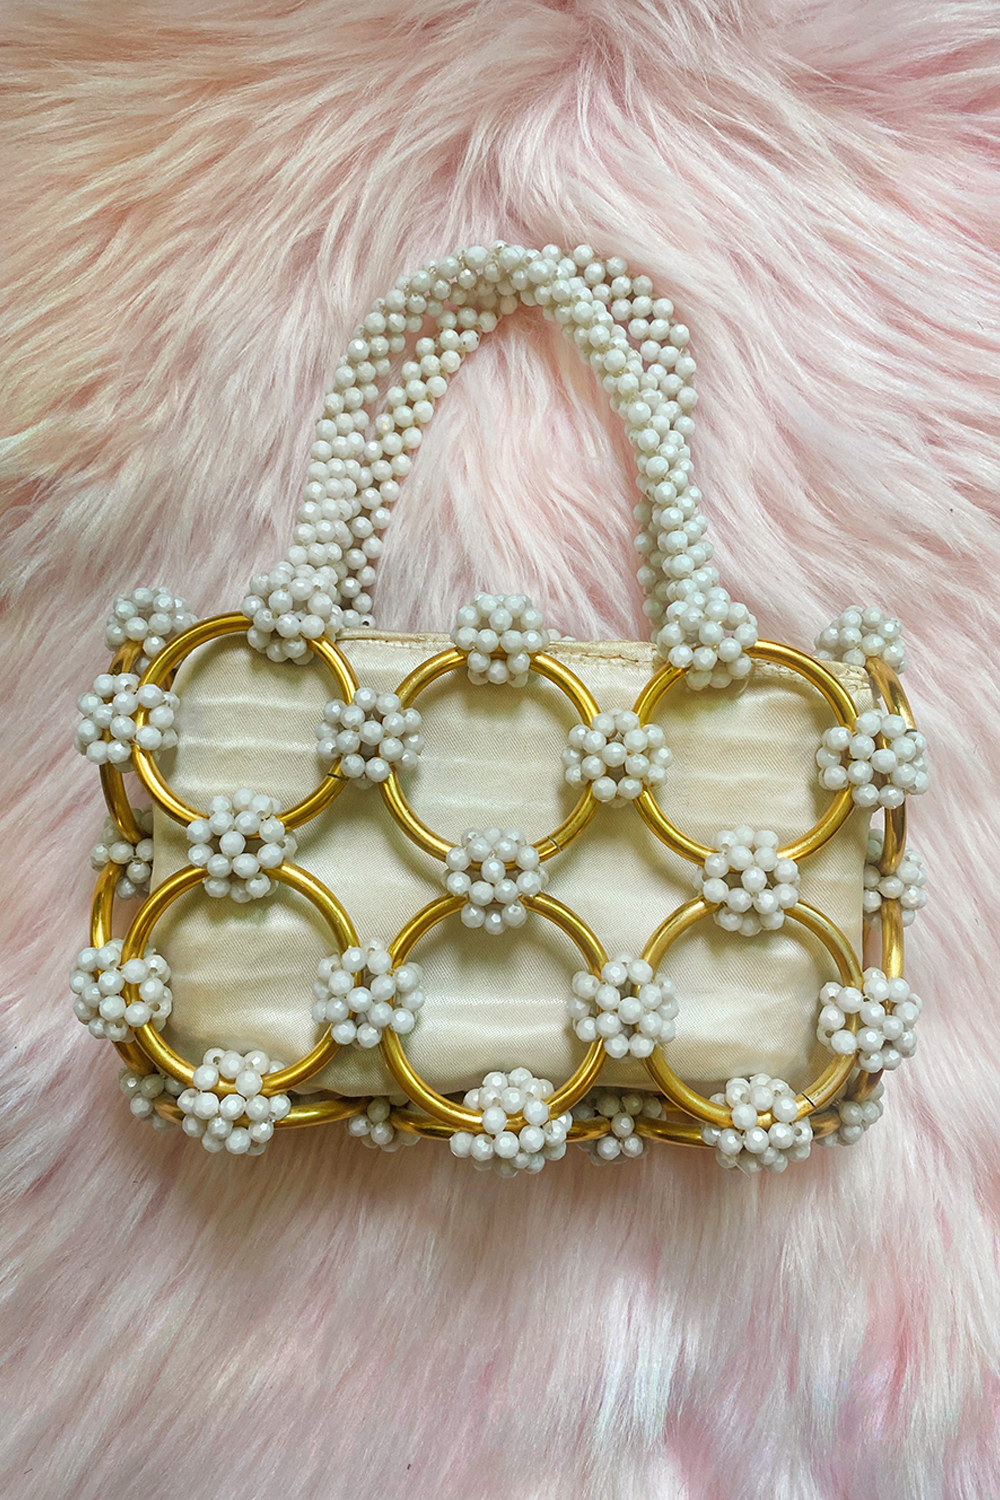 Vintage daisy beads bag